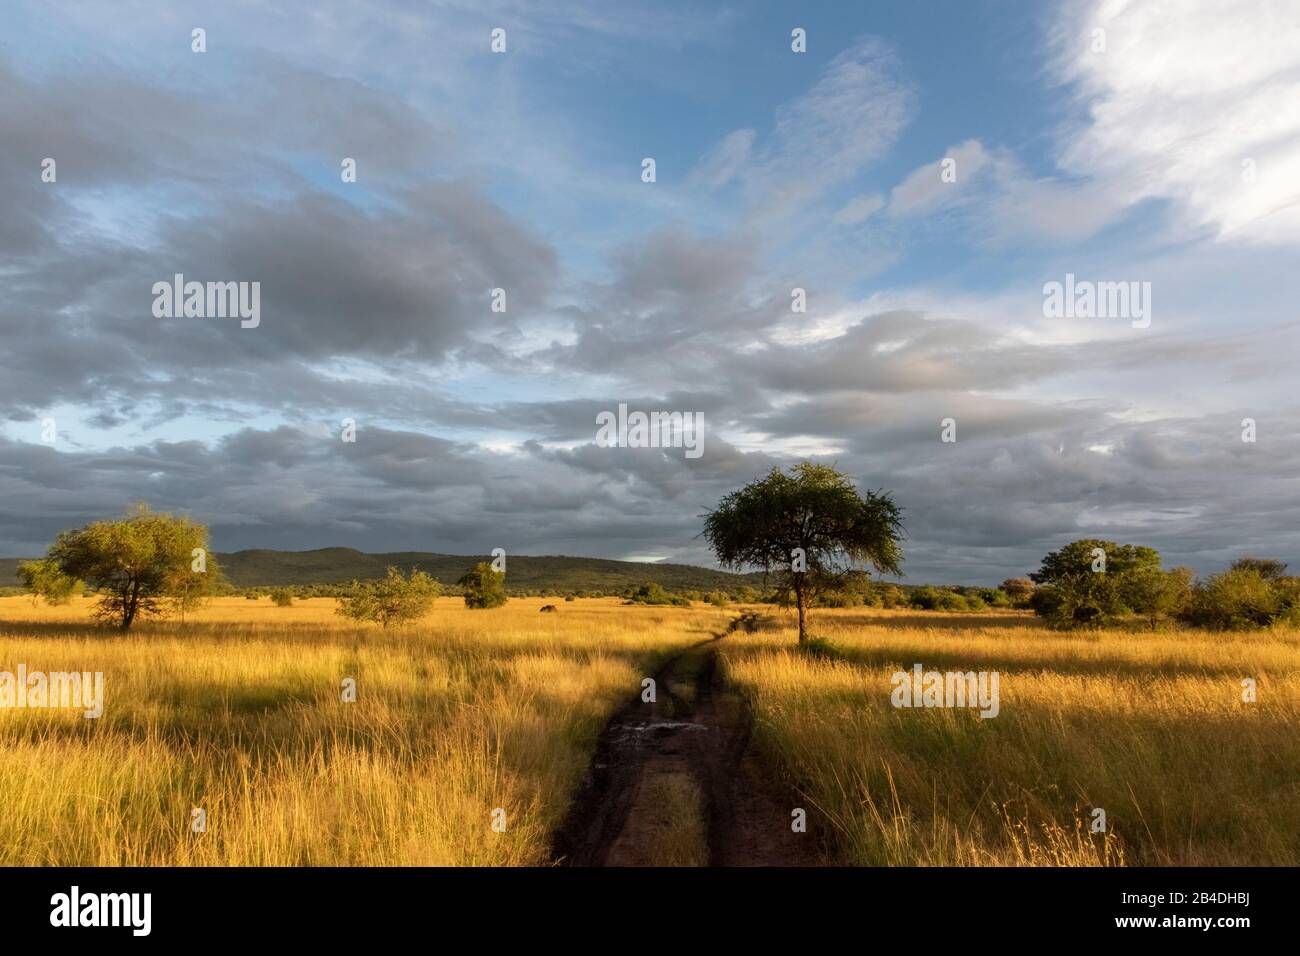 Tanzania, Northern Tanzania, Serengeti National Park, Ngorongoro Crater, Tarangire, Arusha and Lake Manyara, thunderstorm mood Stock Photo